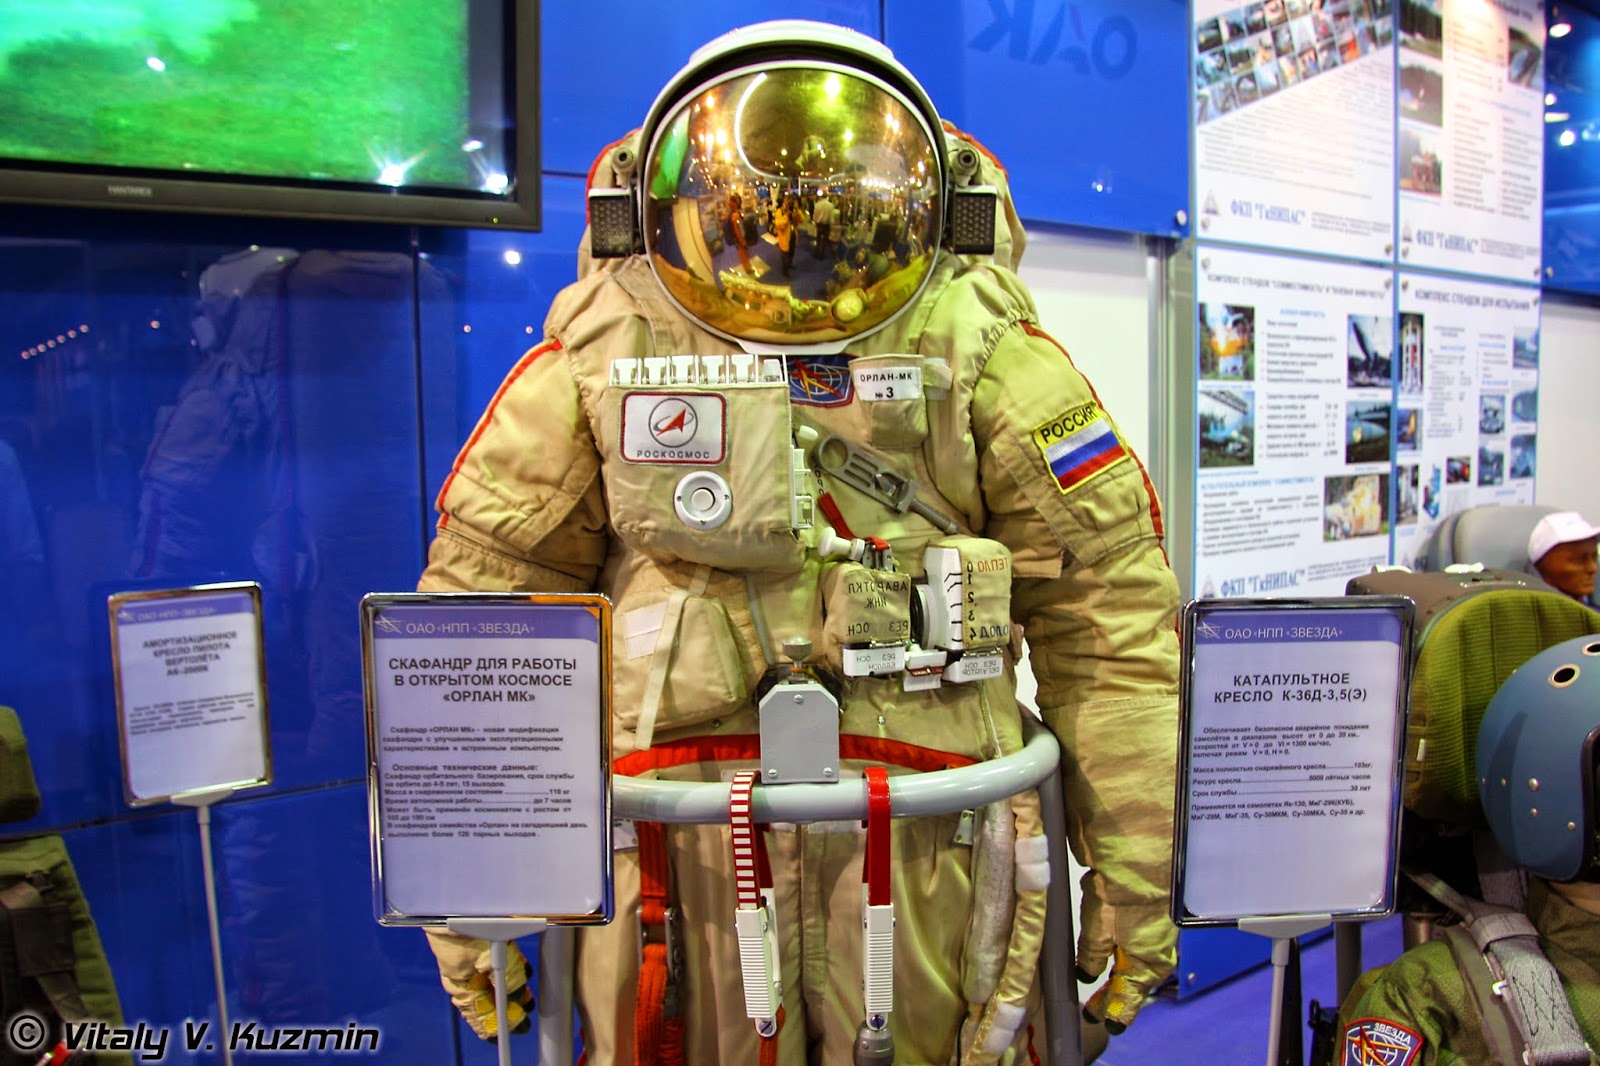 Скафандр дам. Скафандр Космонавта Орлан. Орлан костюм Космонавта. Скафандр Орлан МКС. Скафандр для выхода в открытый космос Орлан.